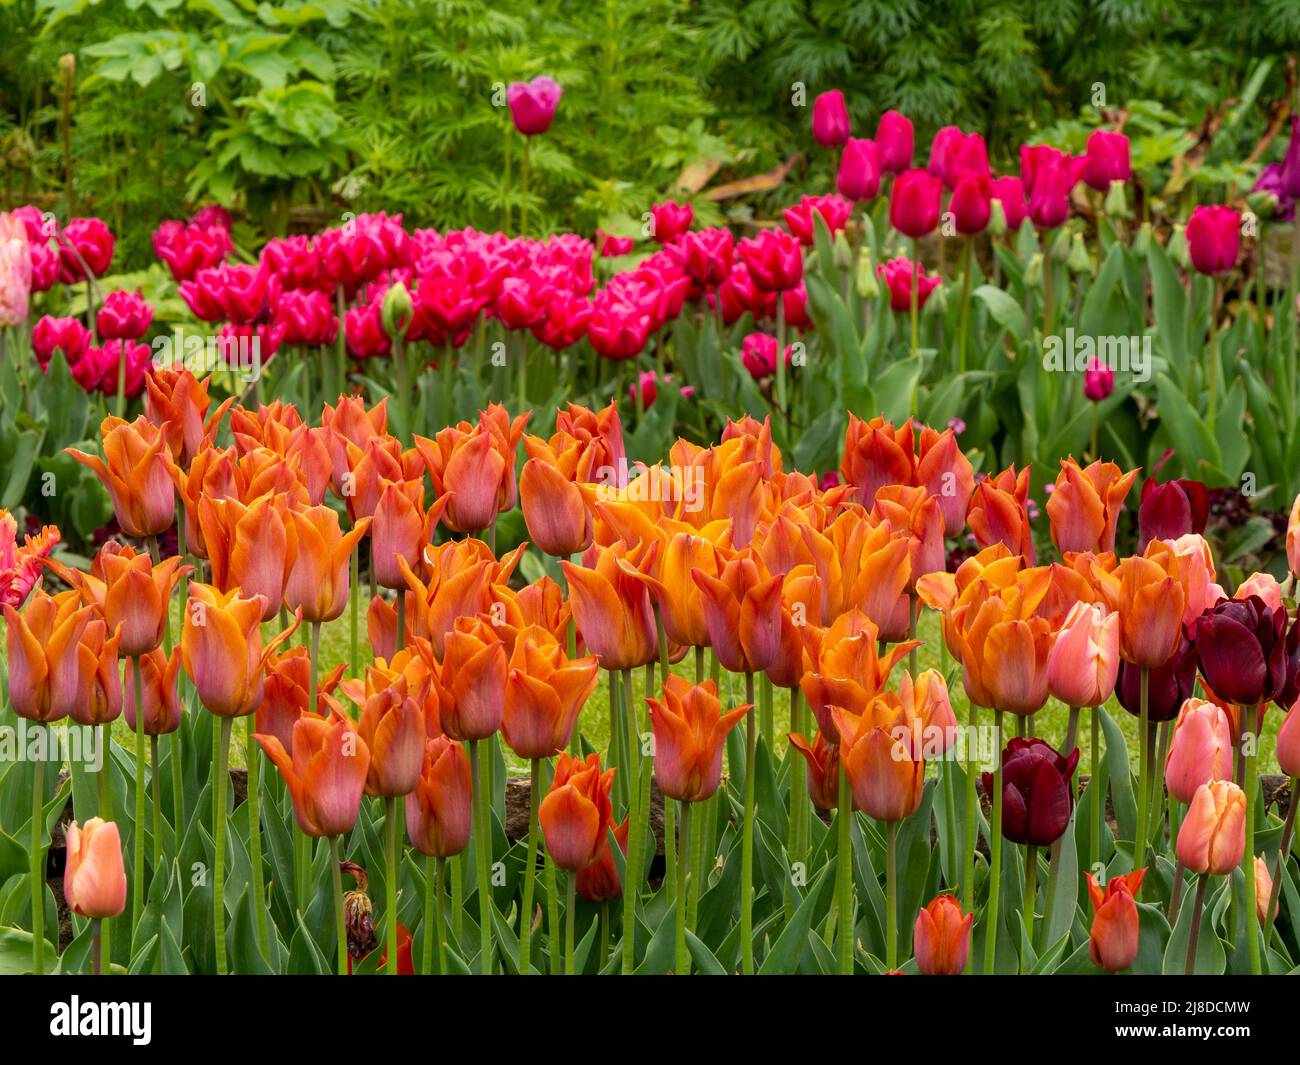 Chenies Manor Garden. Wunderschöne orangefarbene Tulipa 'Cairo' , Tulipa 'Chato' und Tulipa Barcelona' im Hintergrund. Stockfoto